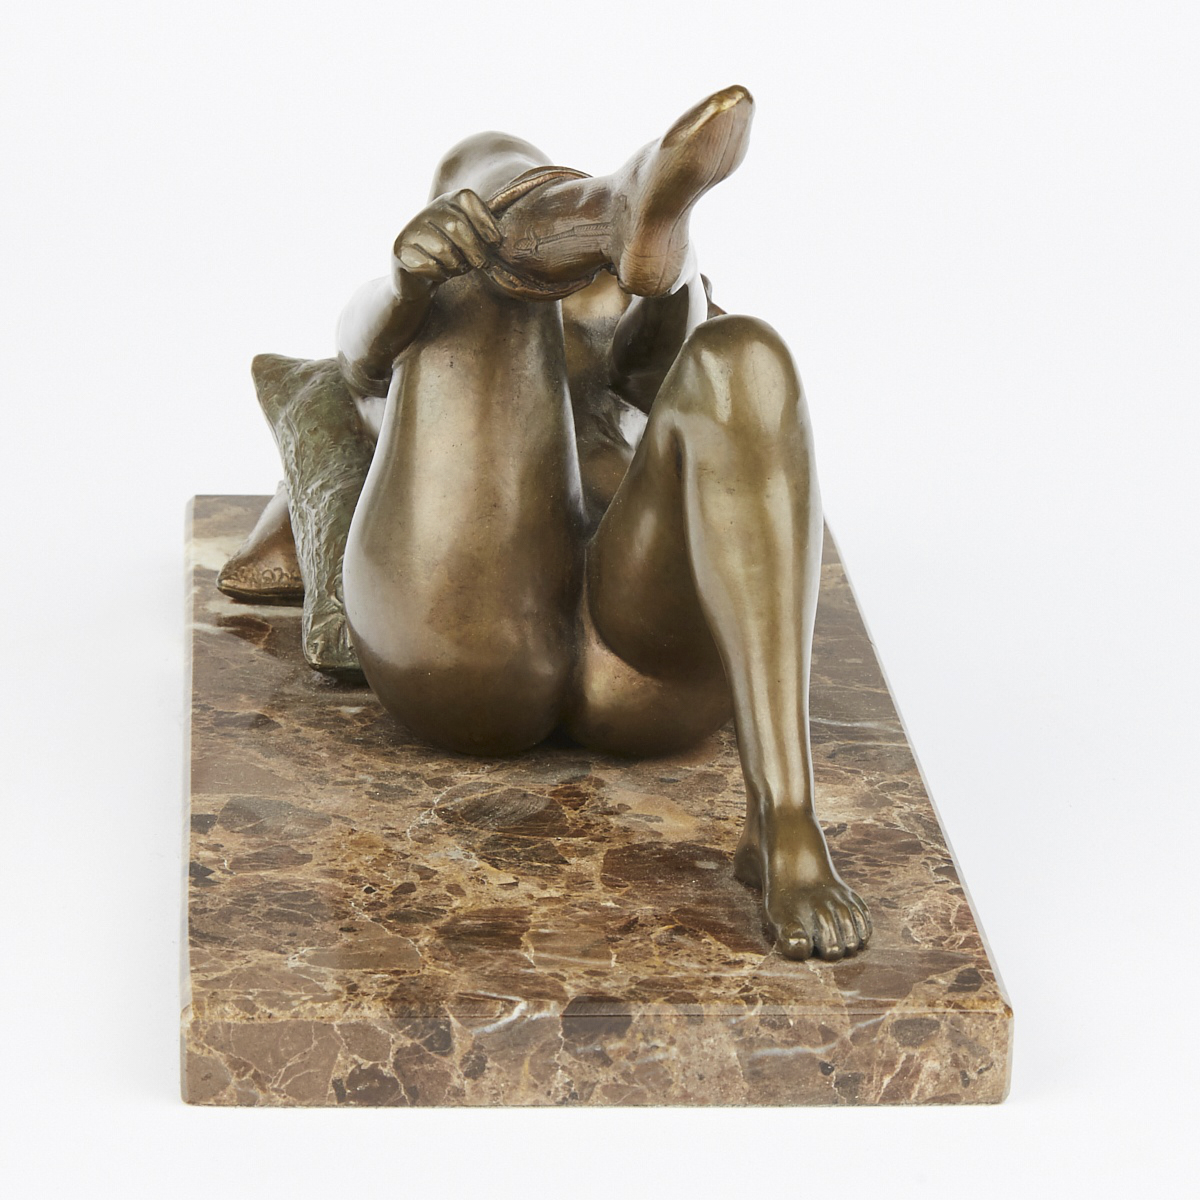 Louis Chalon "Recumbent Female Nude" Bronze Sculpture - Image 2 of 5